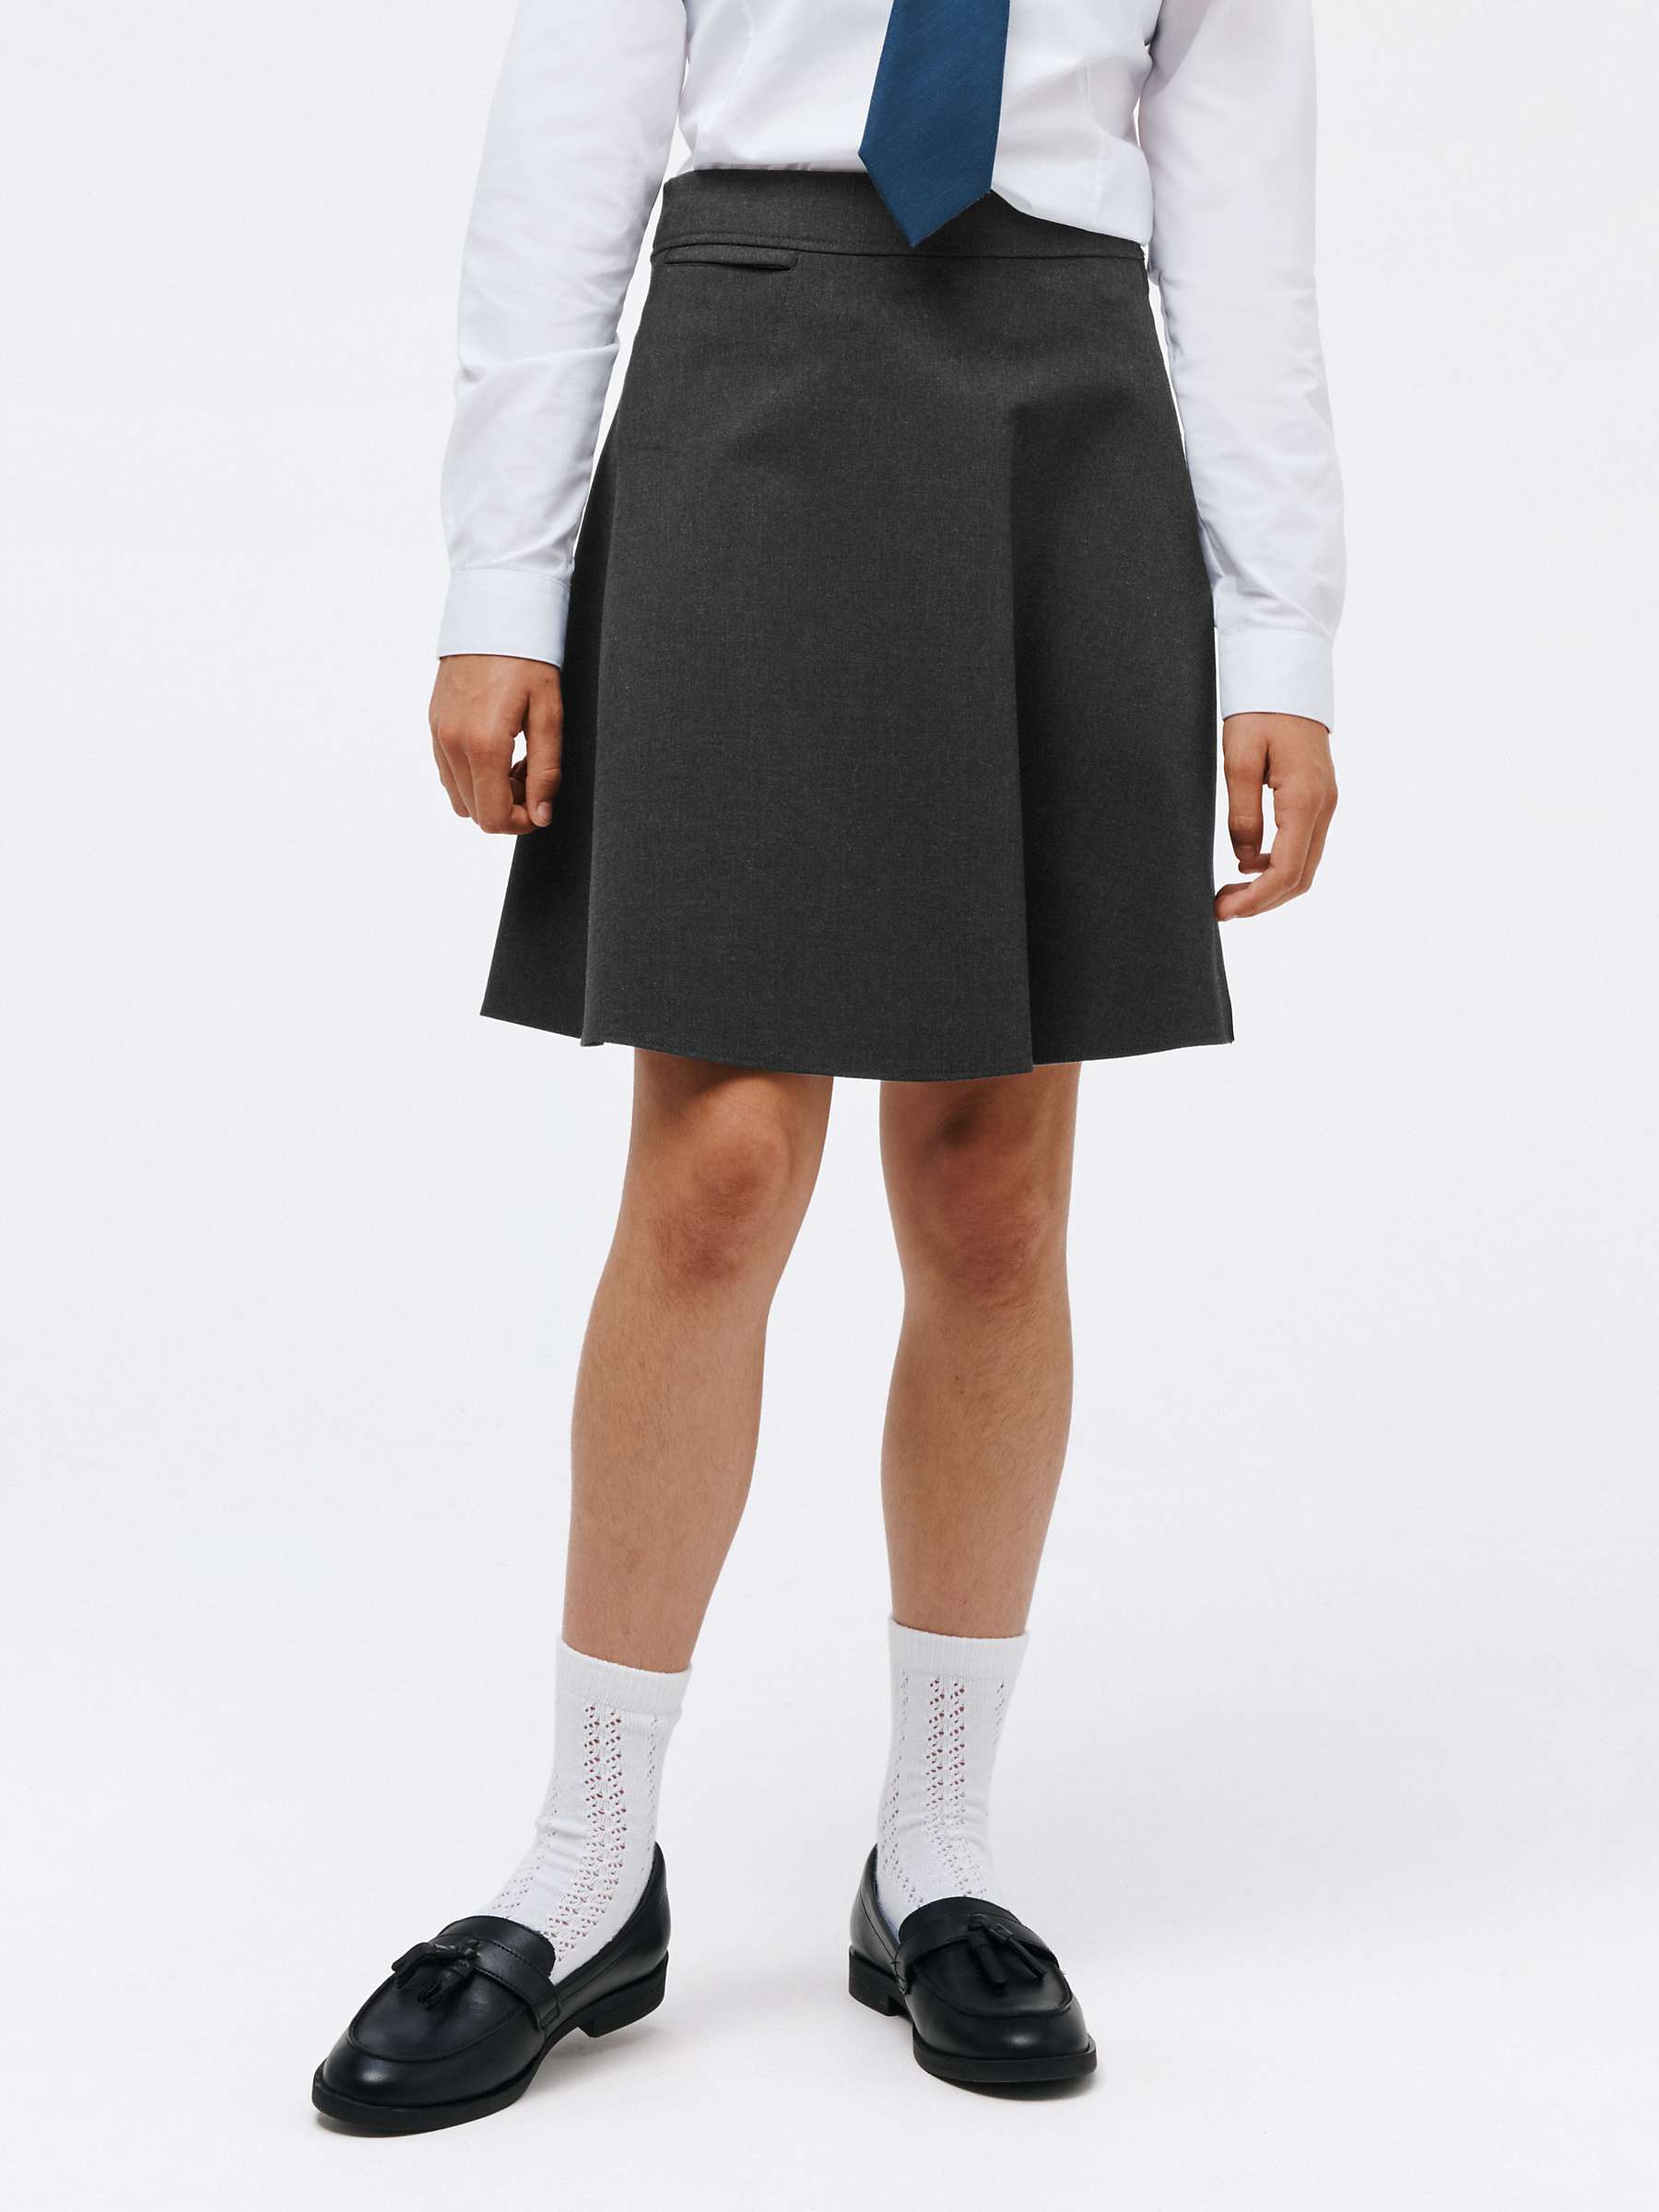 Buy John Lewis Girls' Adjustable Waist Stain Resistant A-Line School Skirt Online at johnlewis.com